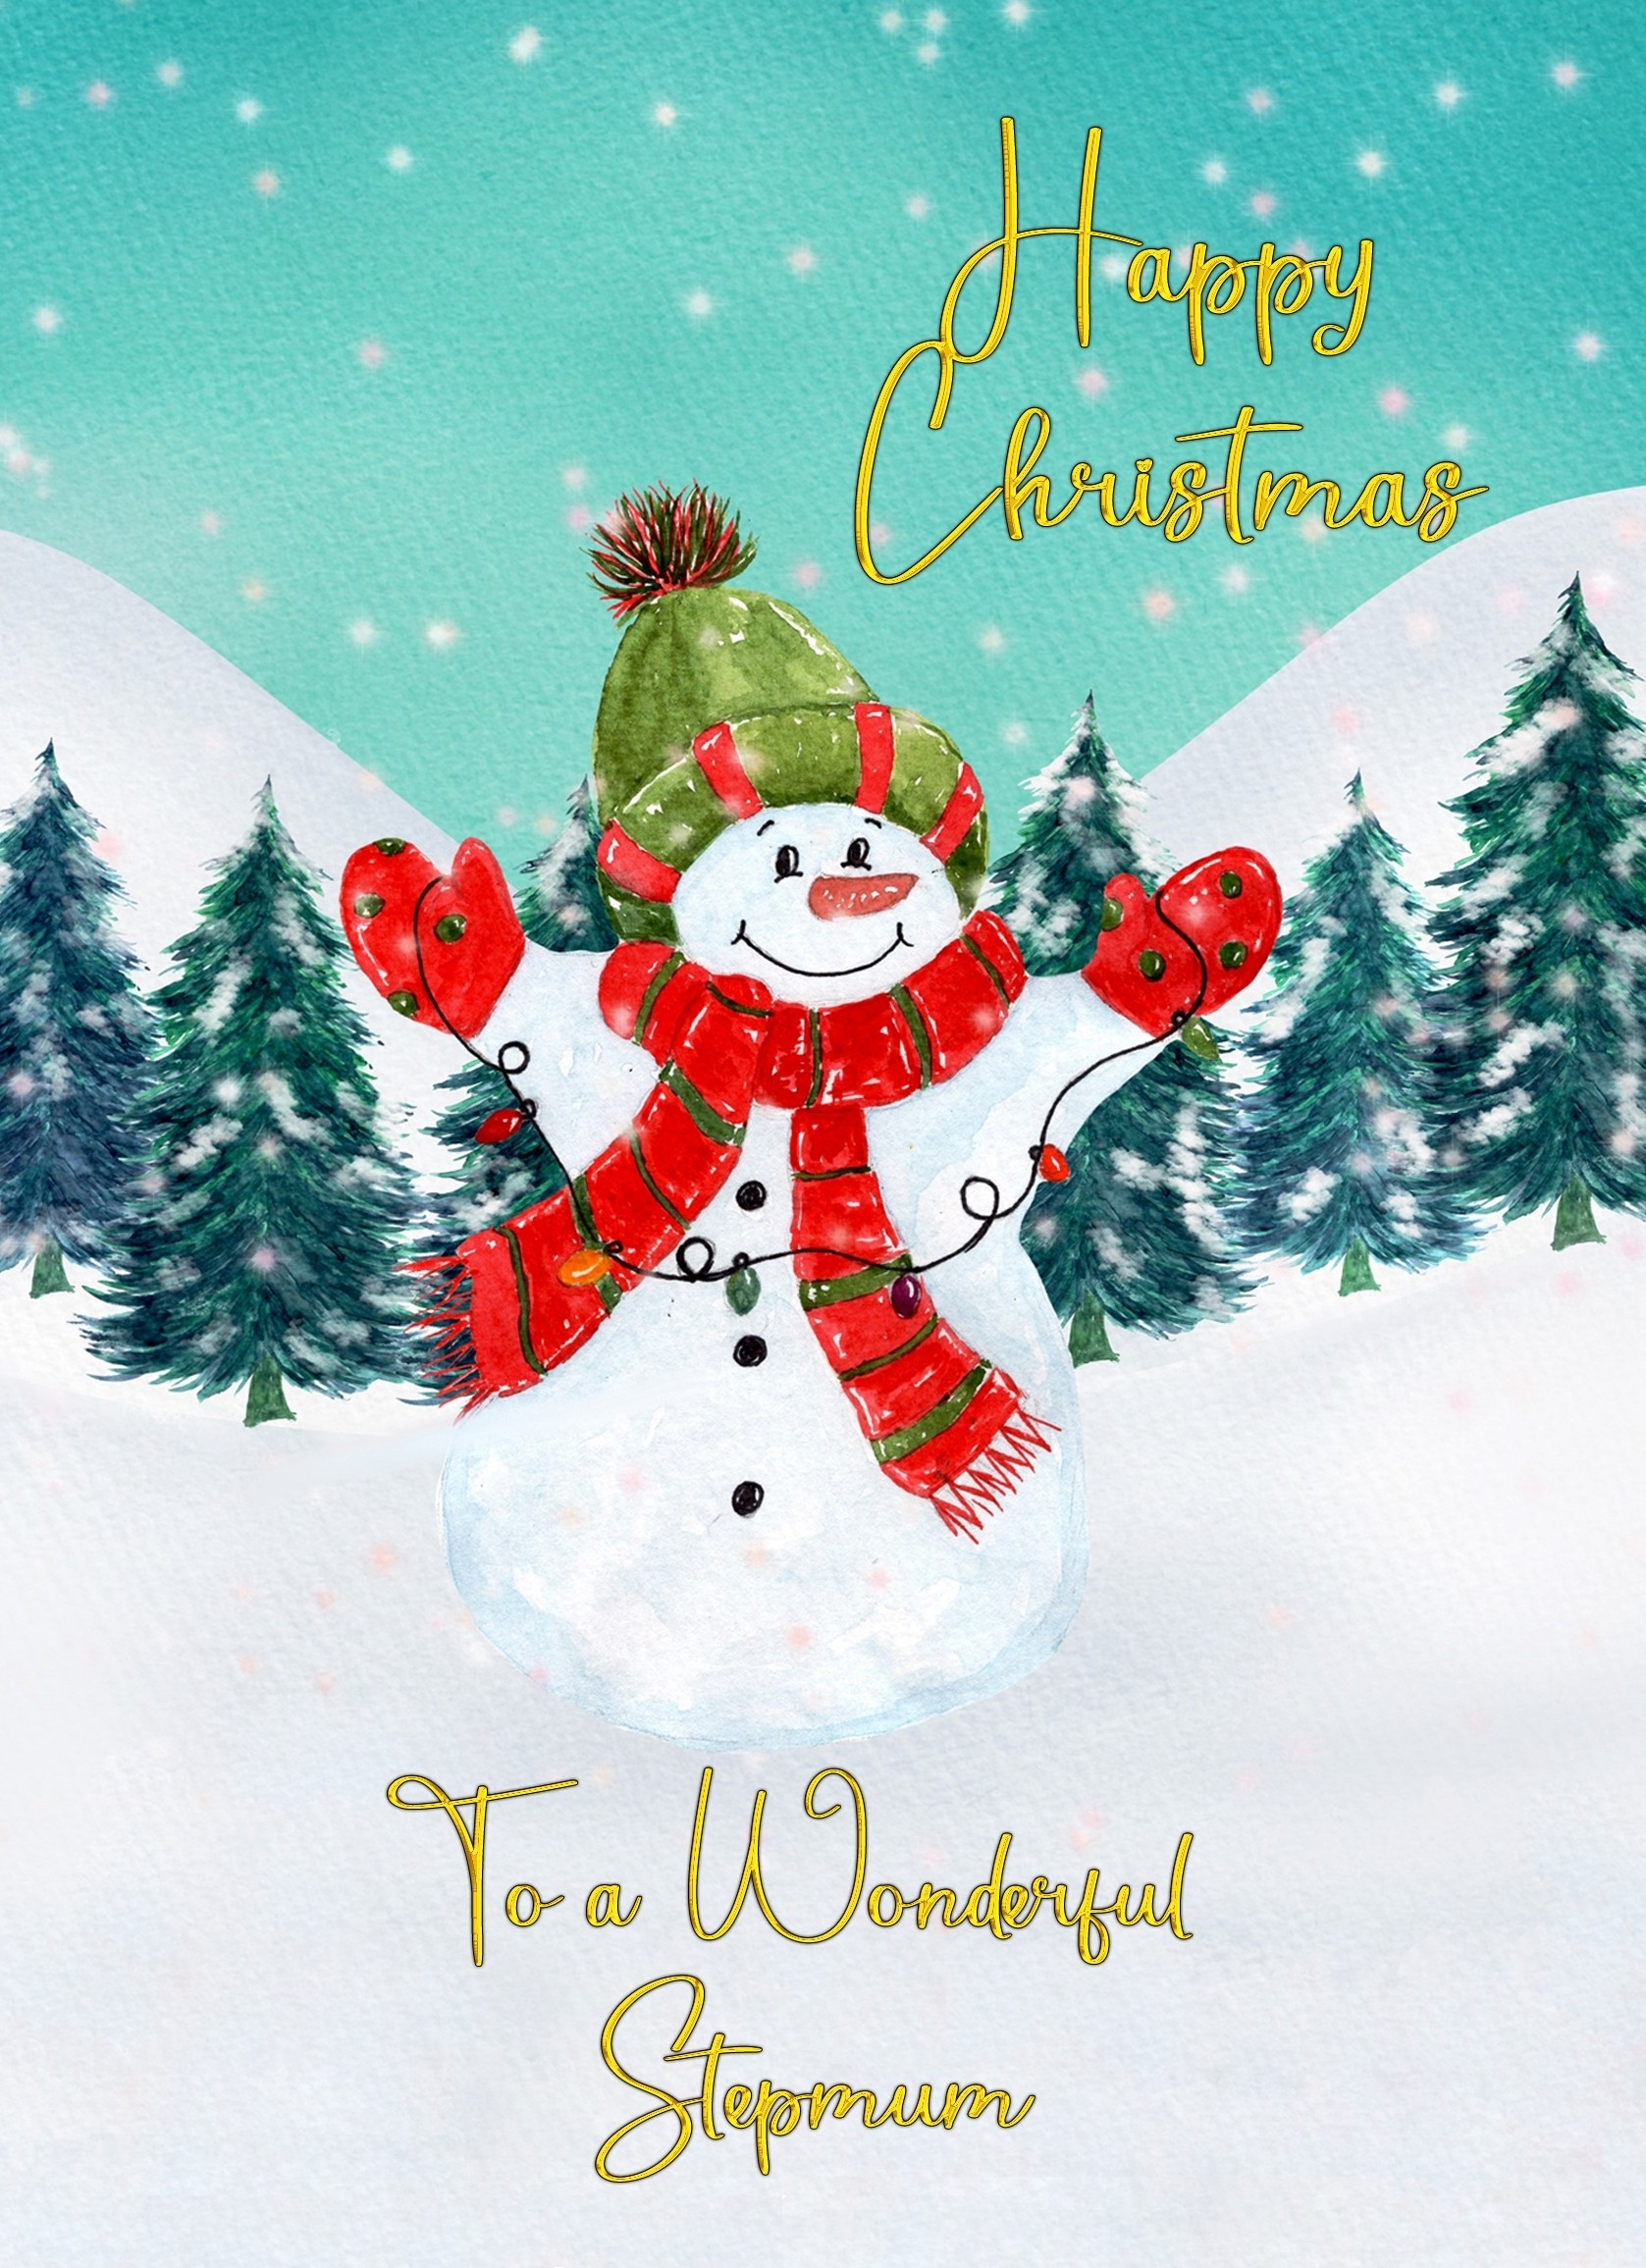 Christmas Card For Stepmum (Snowman)